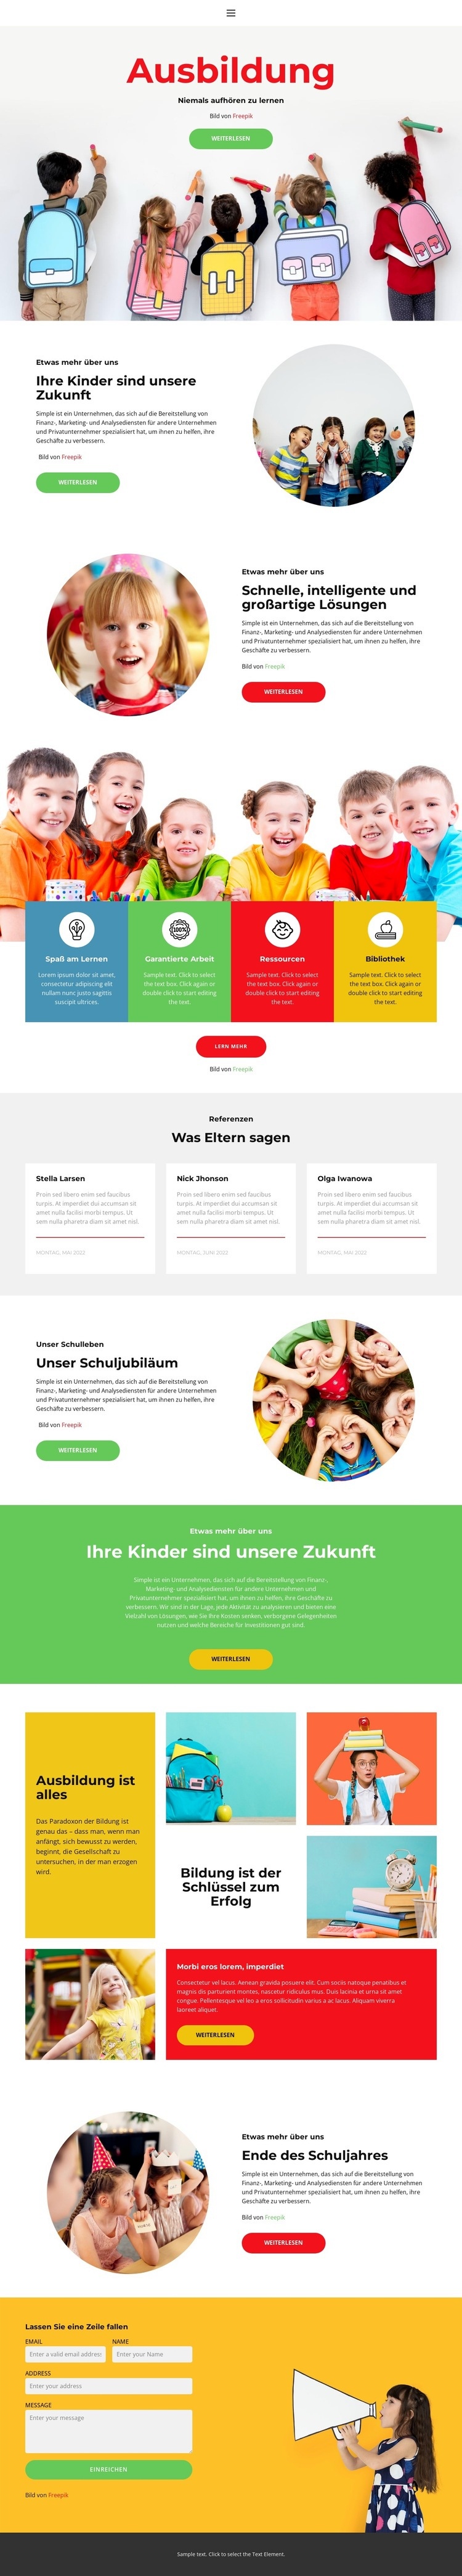 Unser Schulleben Website-Modell